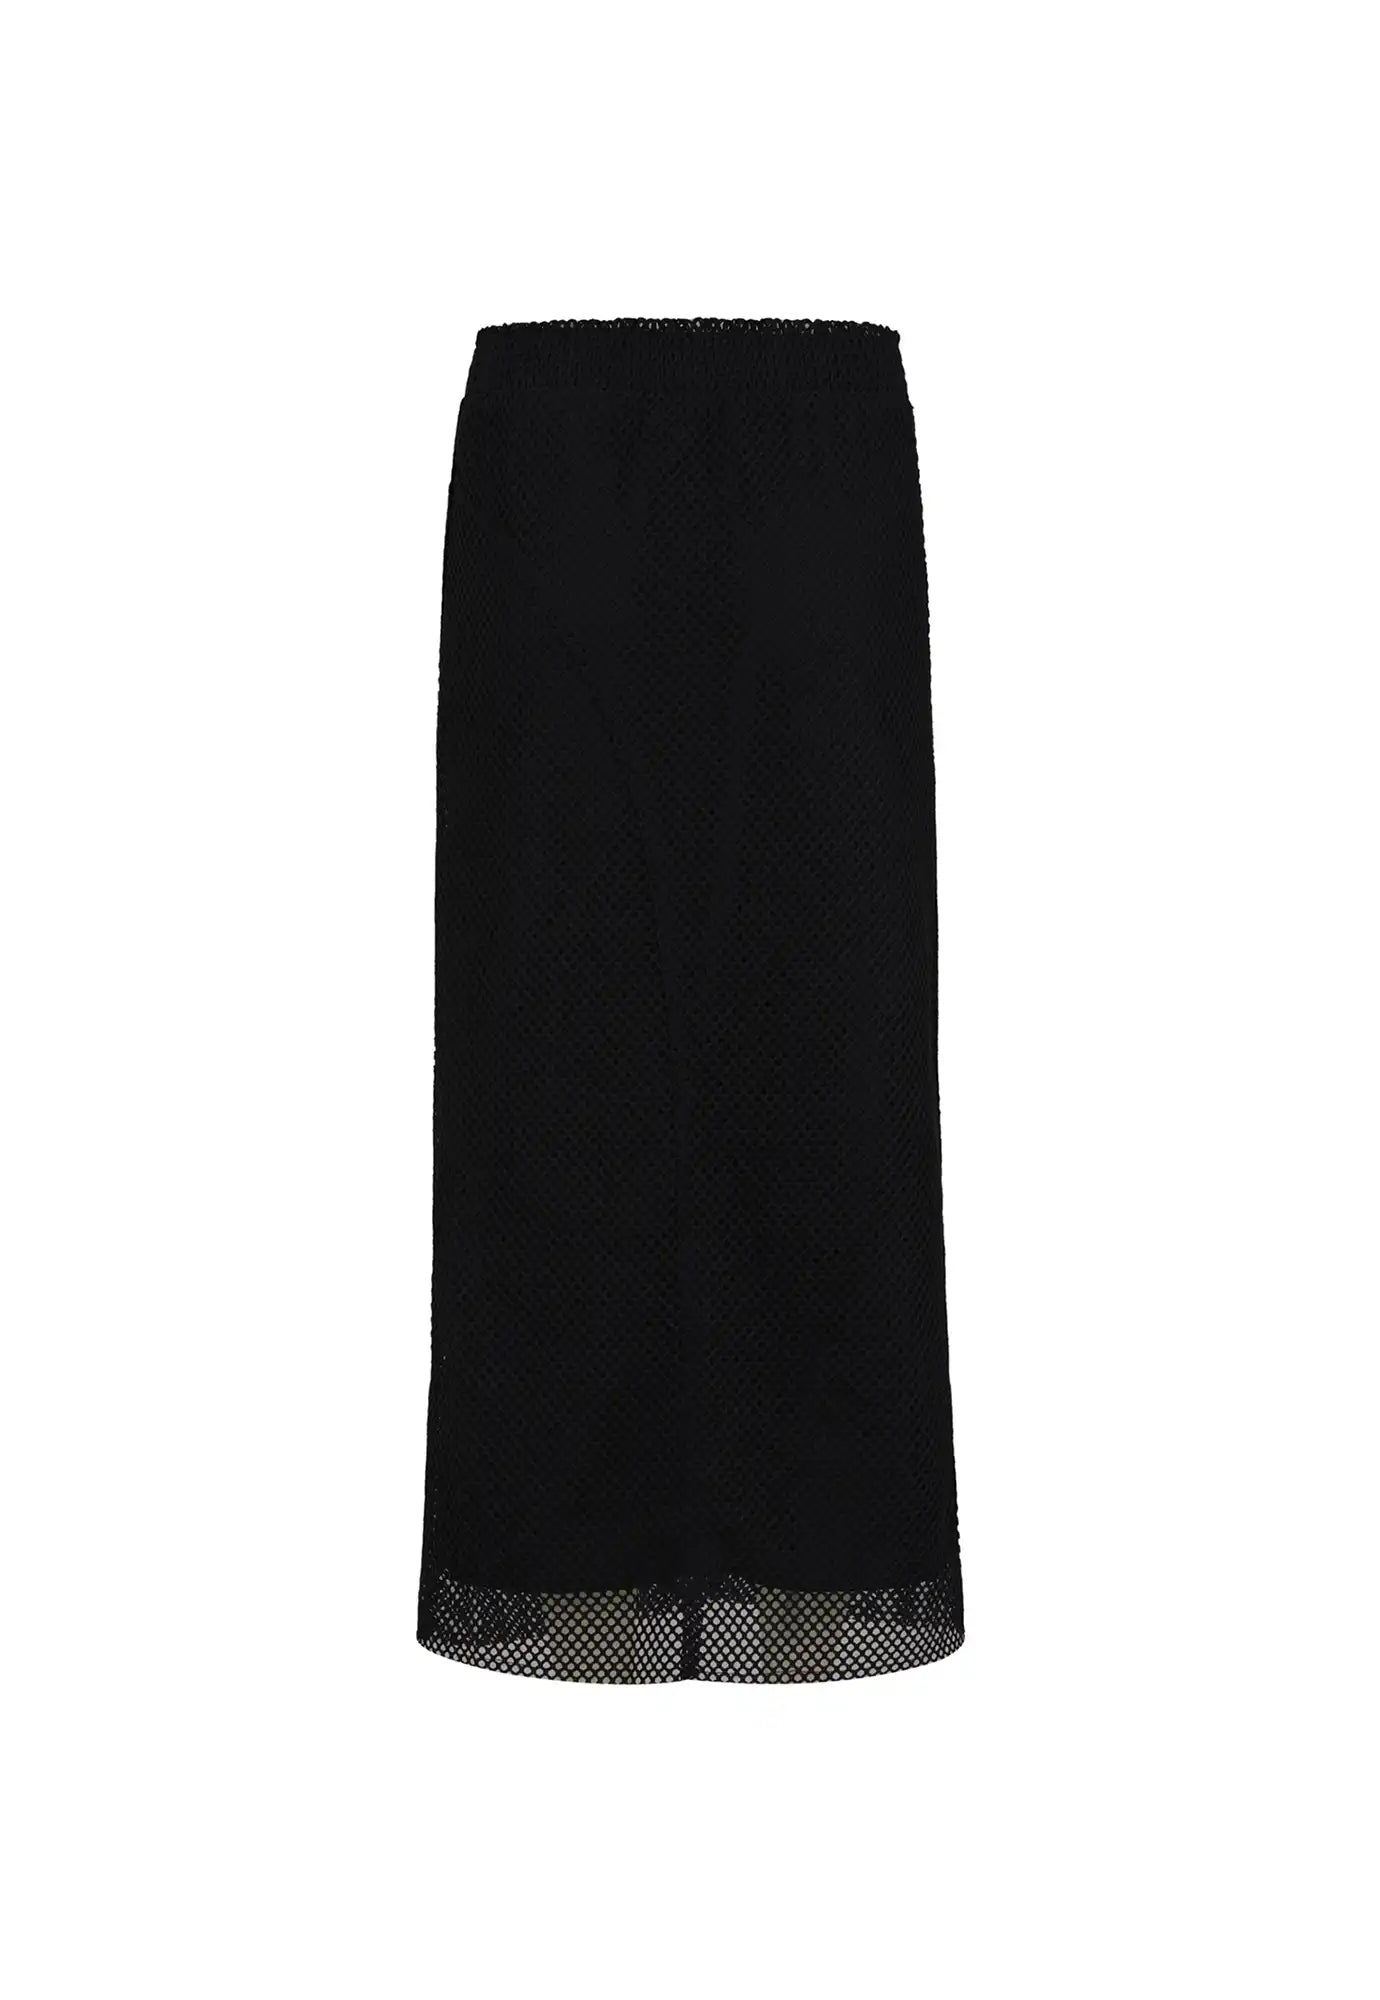 coster copenhagen - lace skirt - black